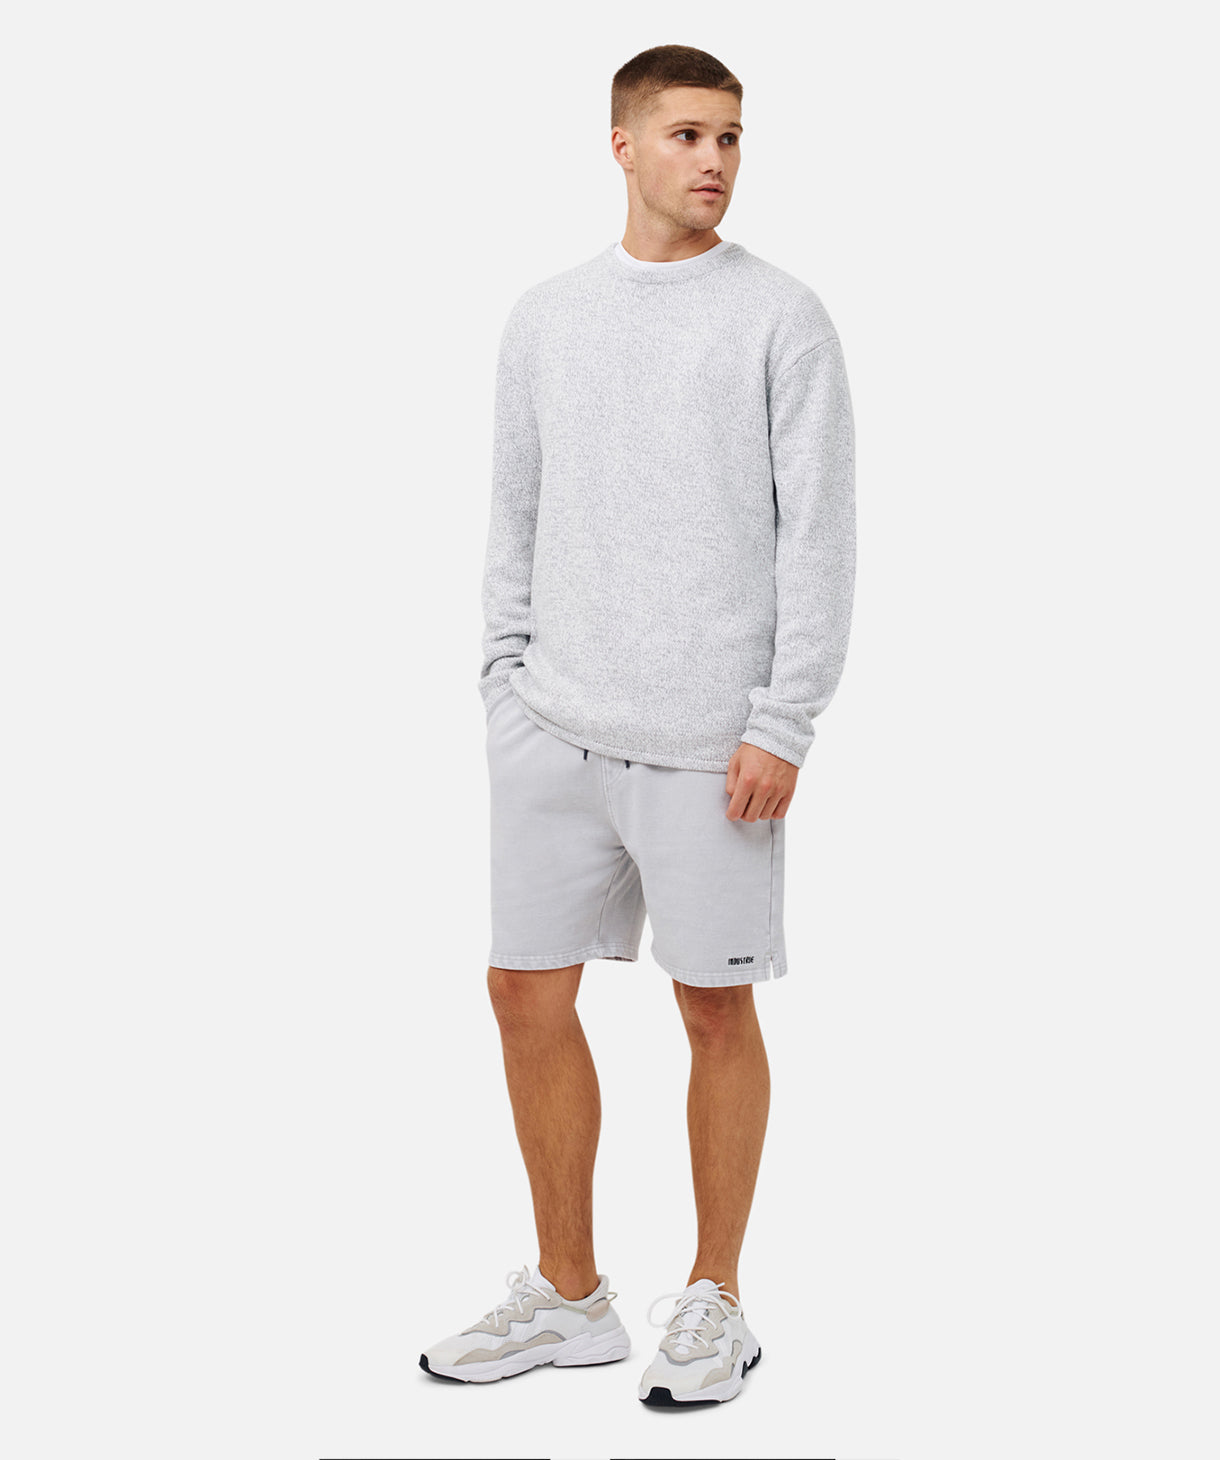 The Hacienda Knit - Grey/White – Industrie Clothing Pty Ltd